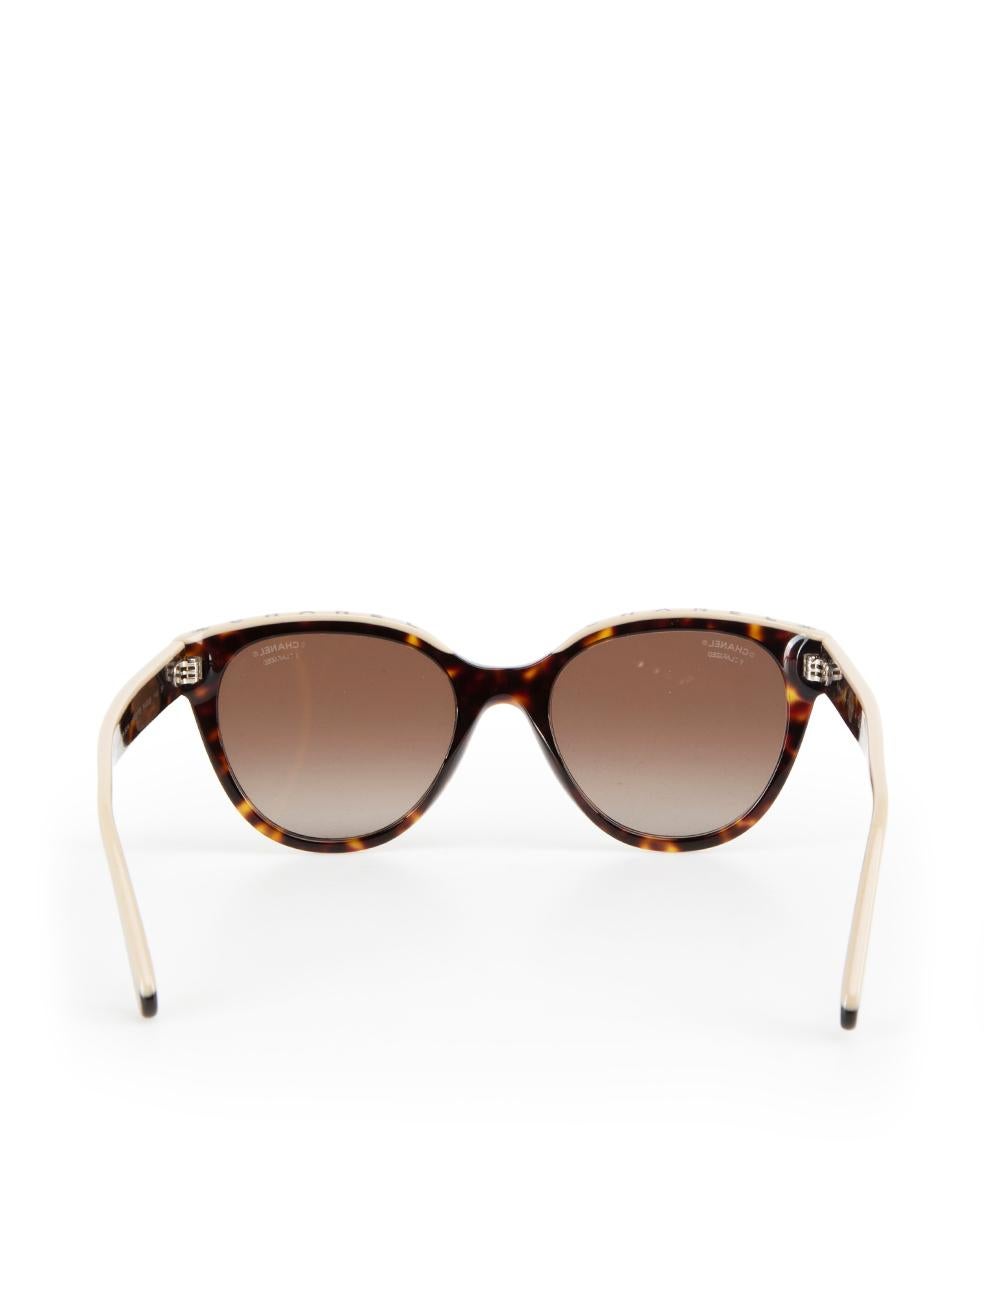 Women's Chanel Dark Tortoise Butterfly Sunglasses For Sale